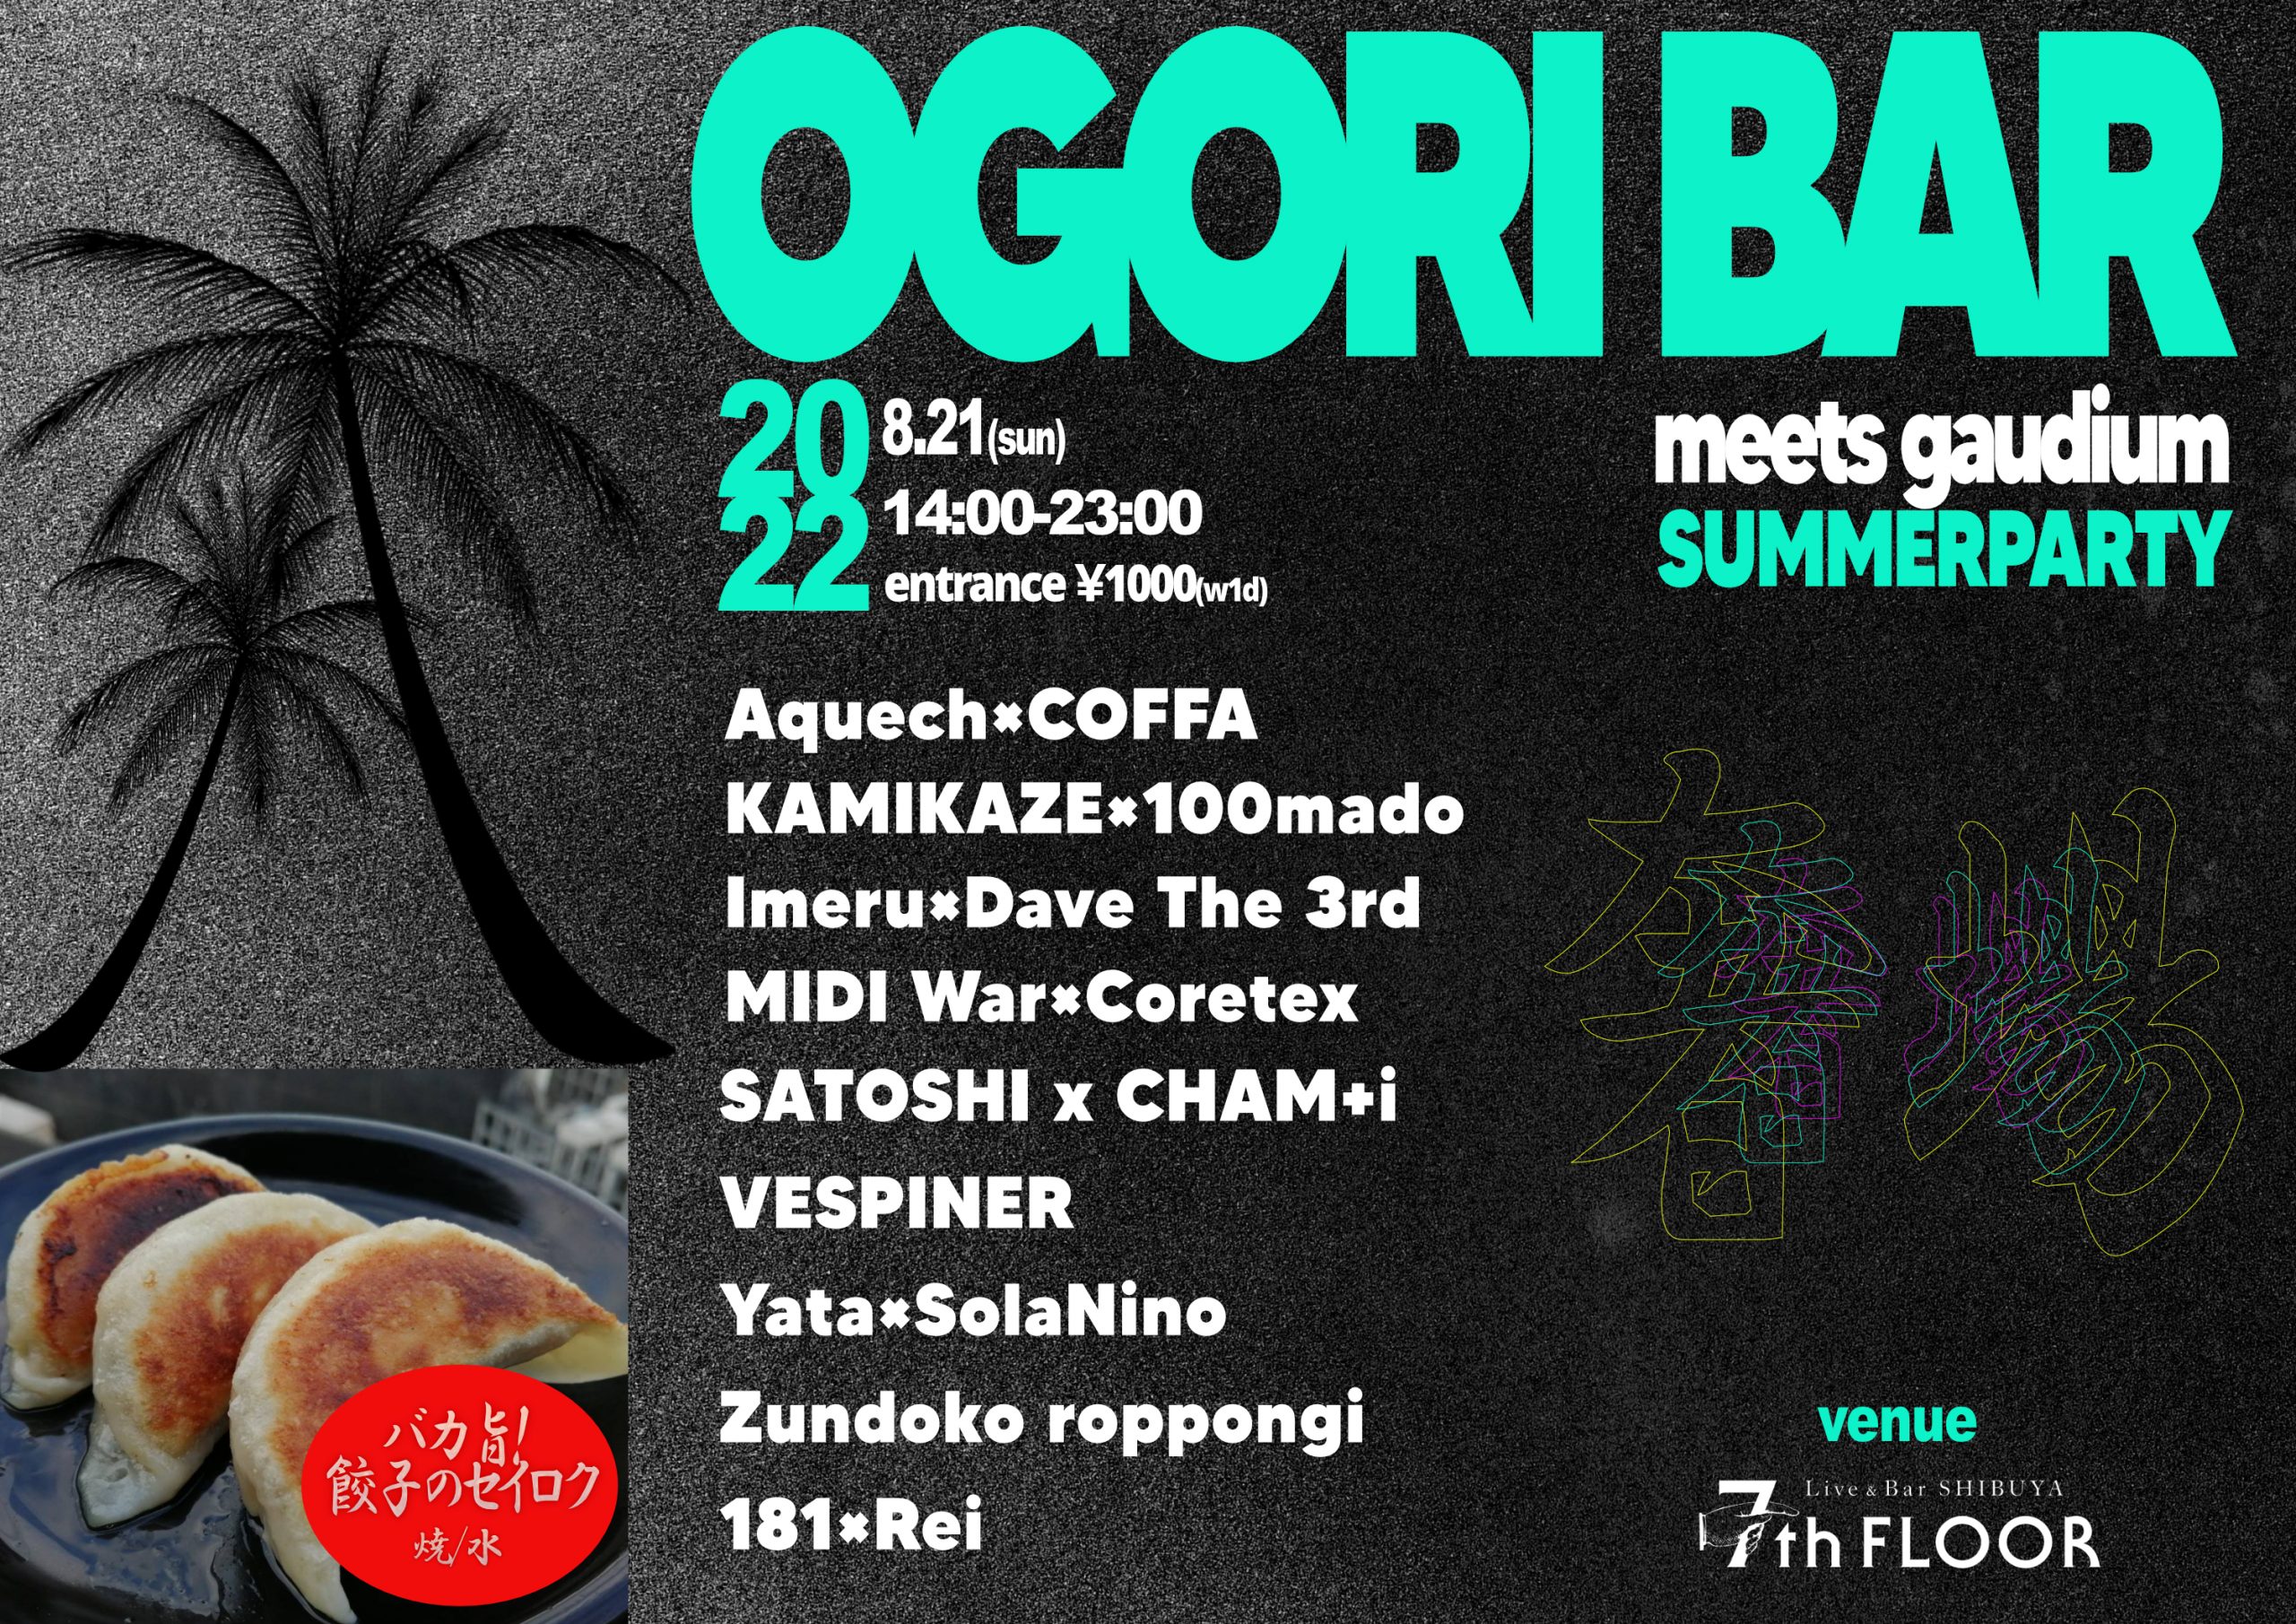 「ogori bar」 meets gaudium -SUMMER PARTY-